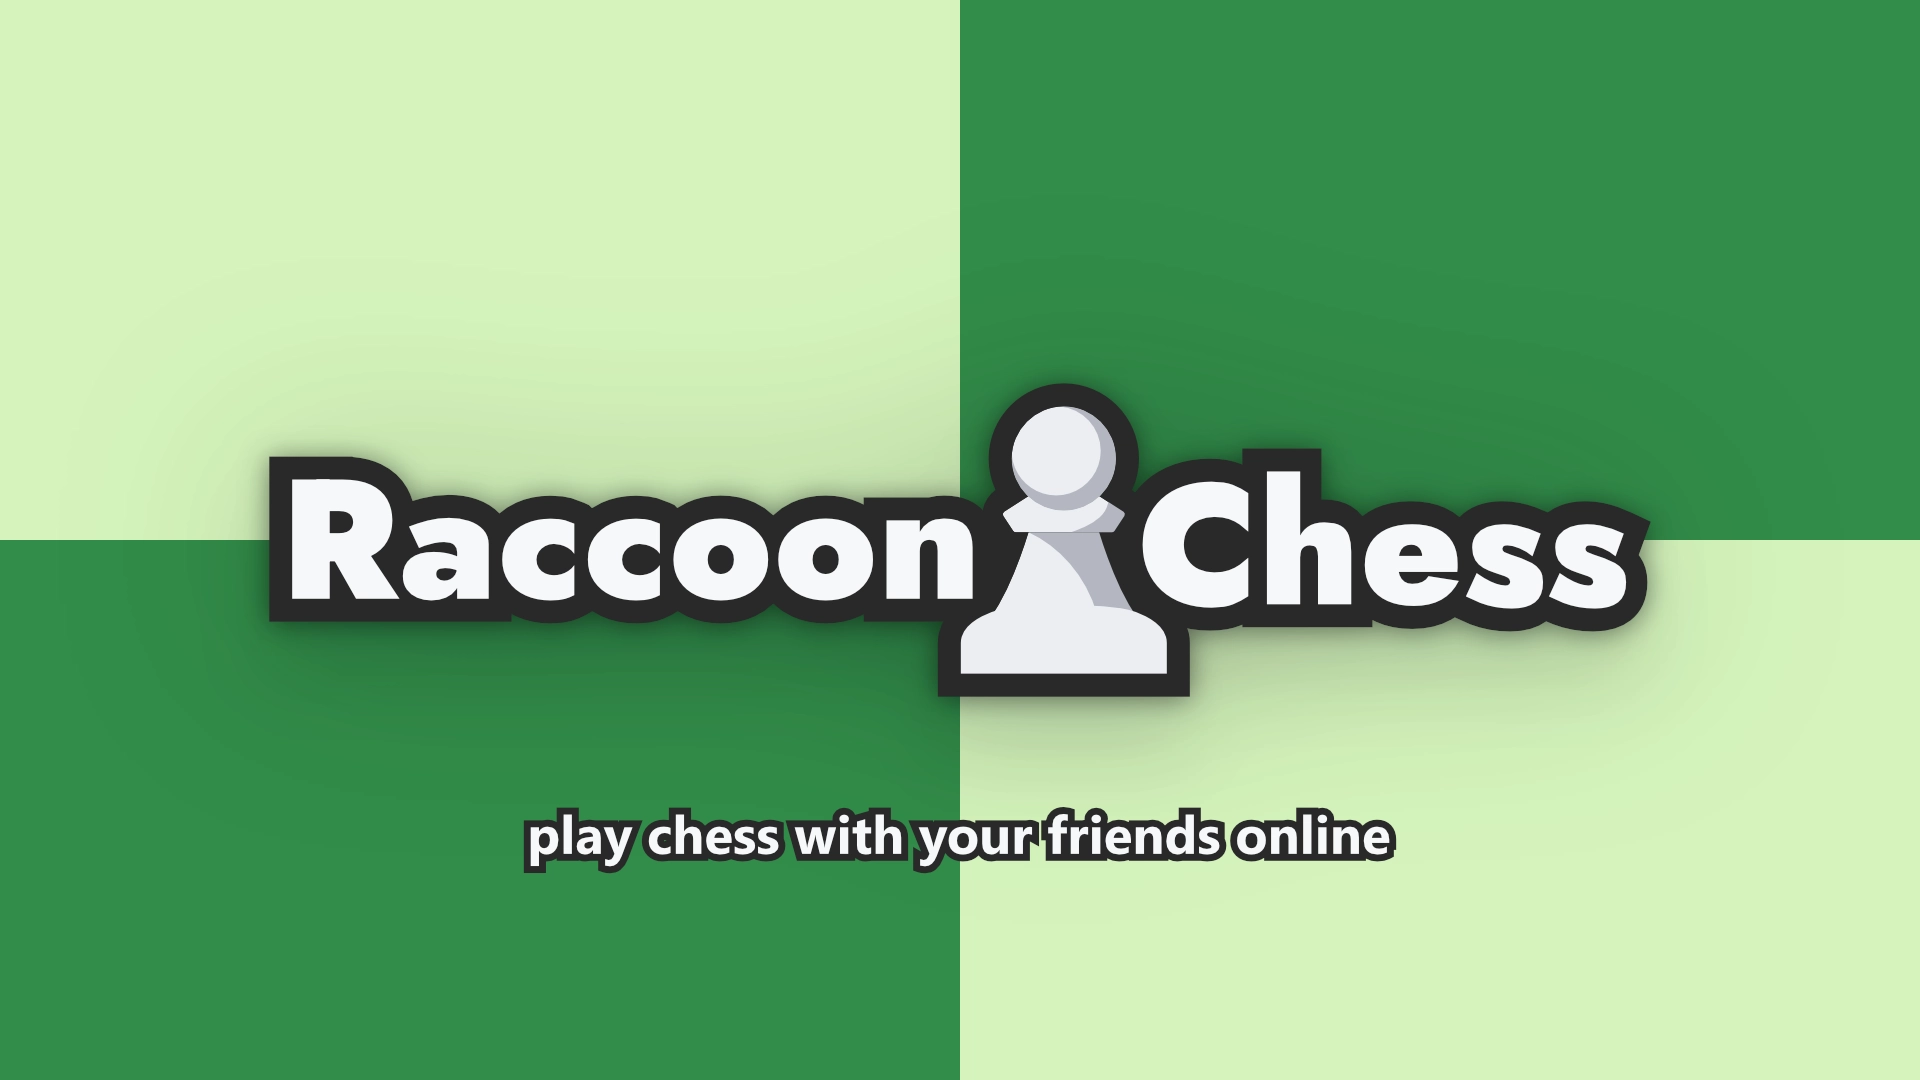 Raccoon Chess